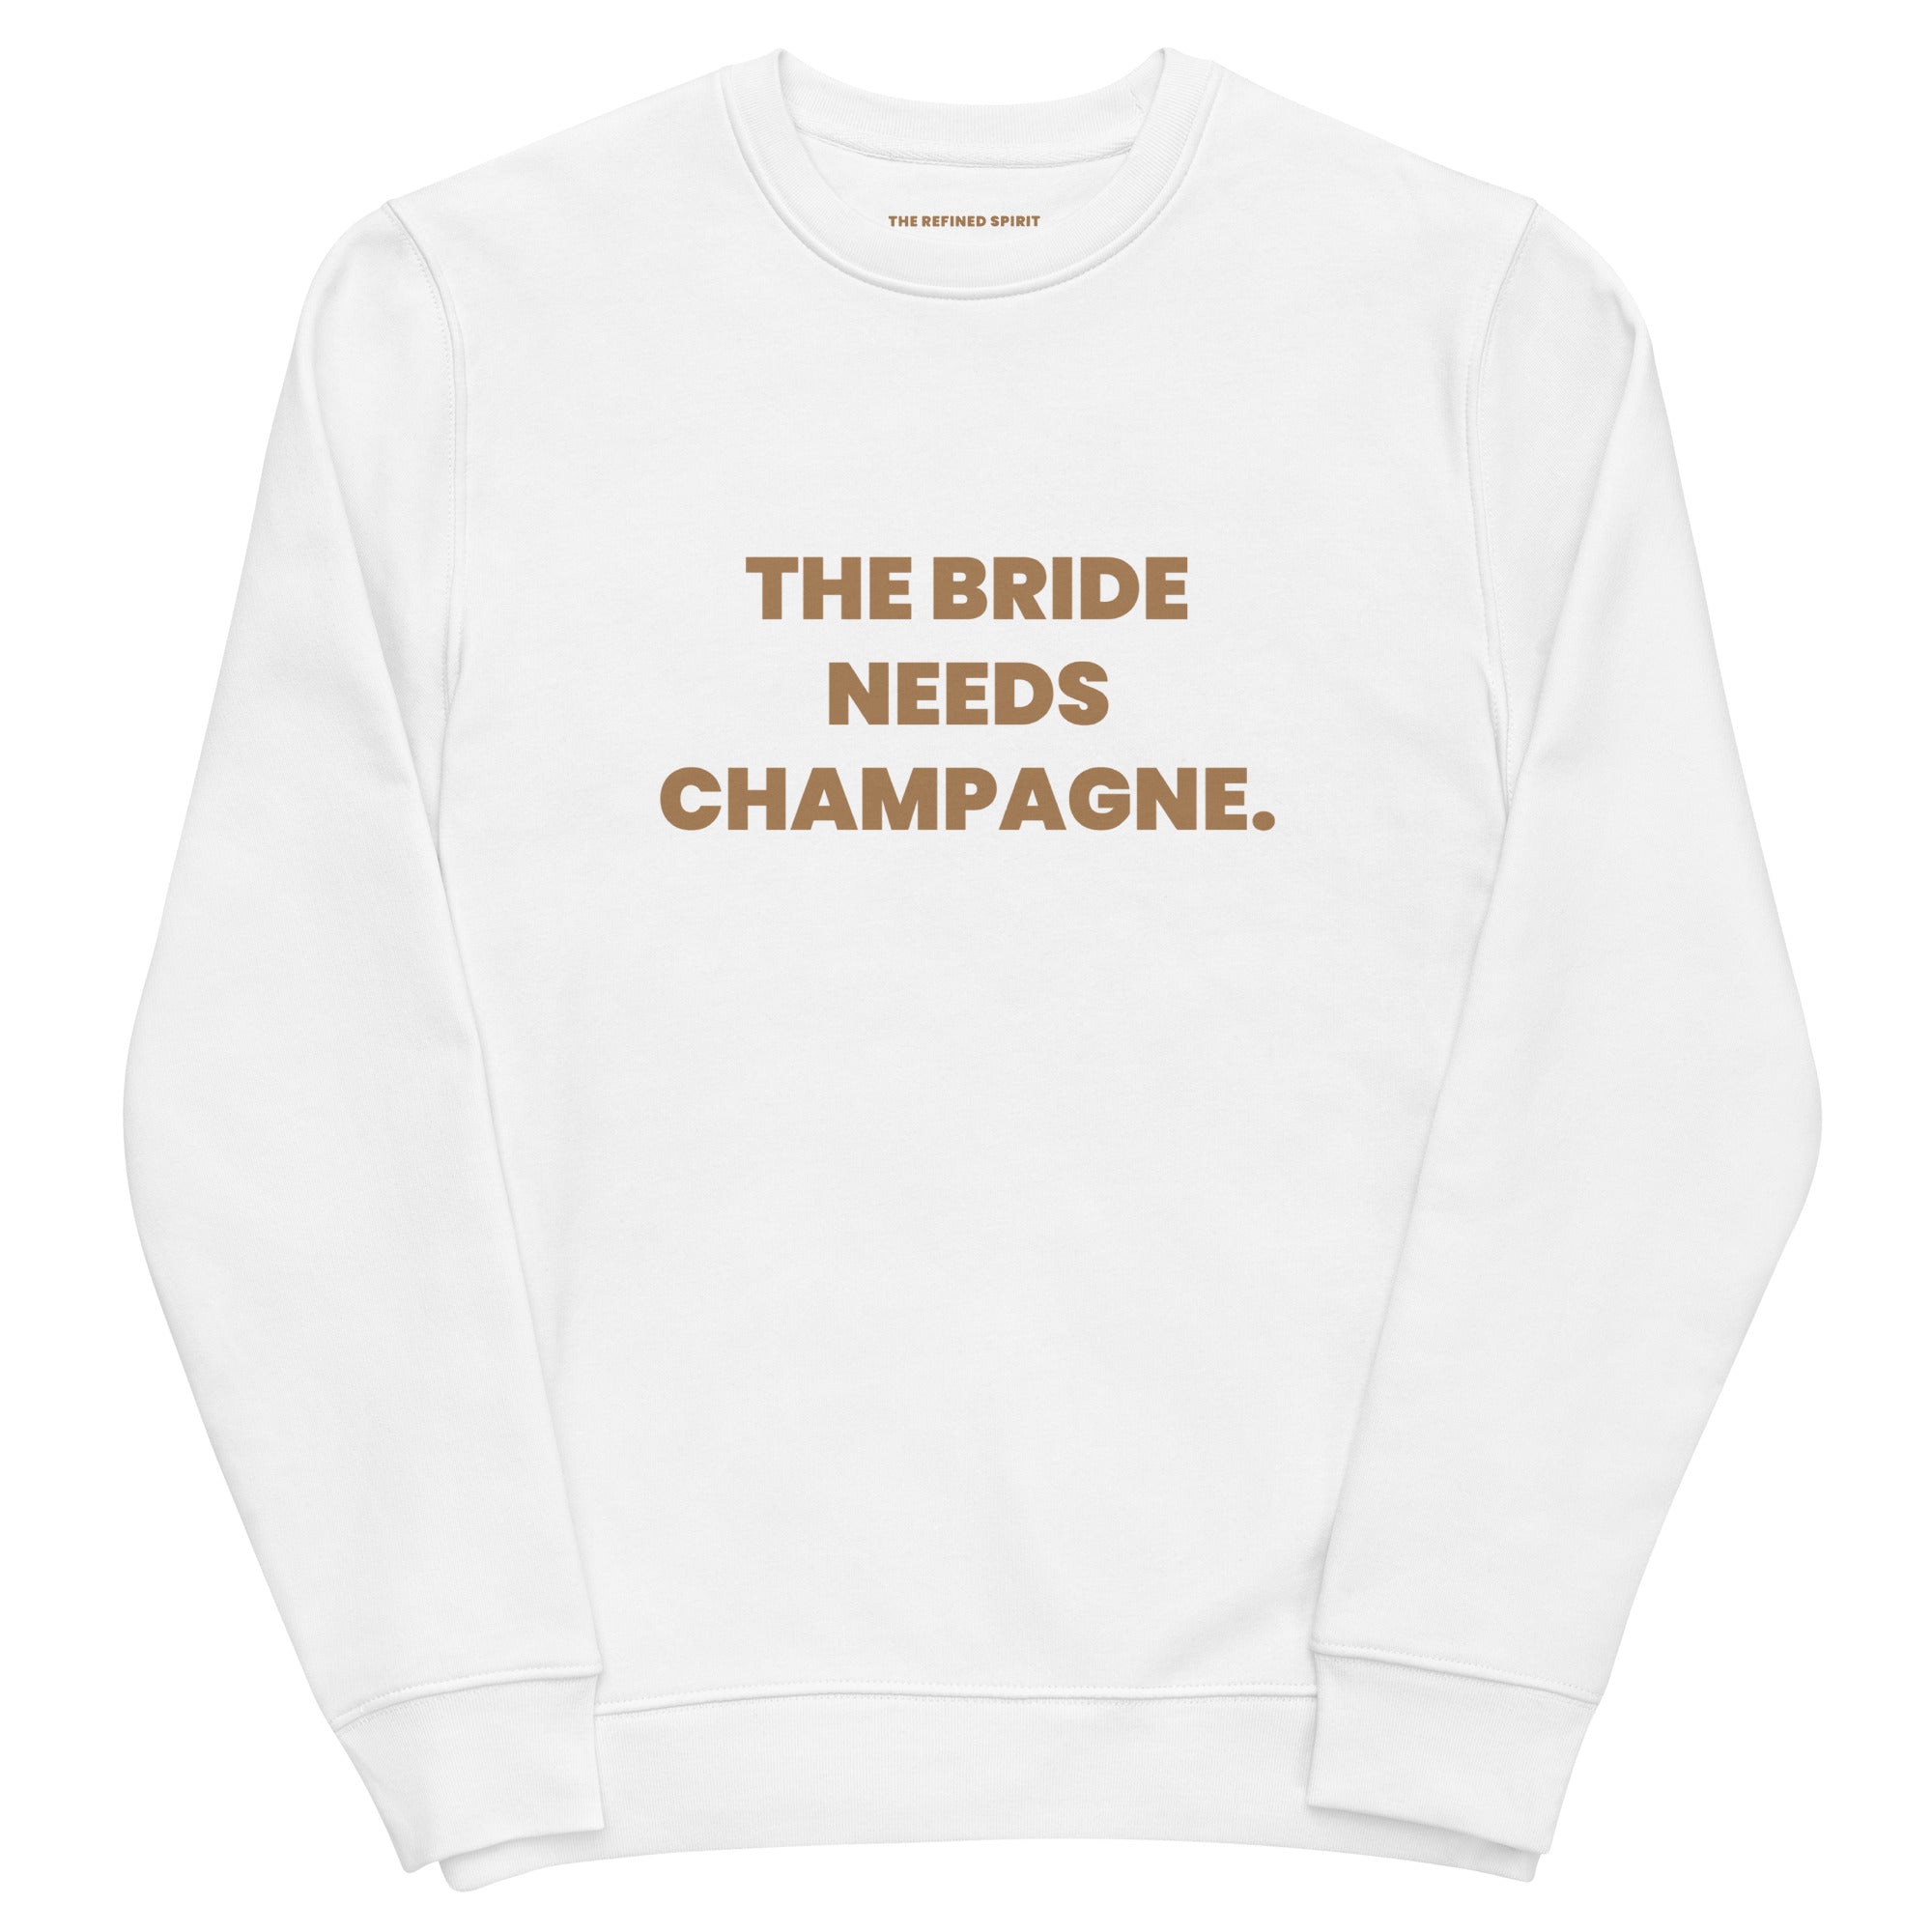 The Bride needs Champagne - Organic Sweatshirt - The Refined Spirit